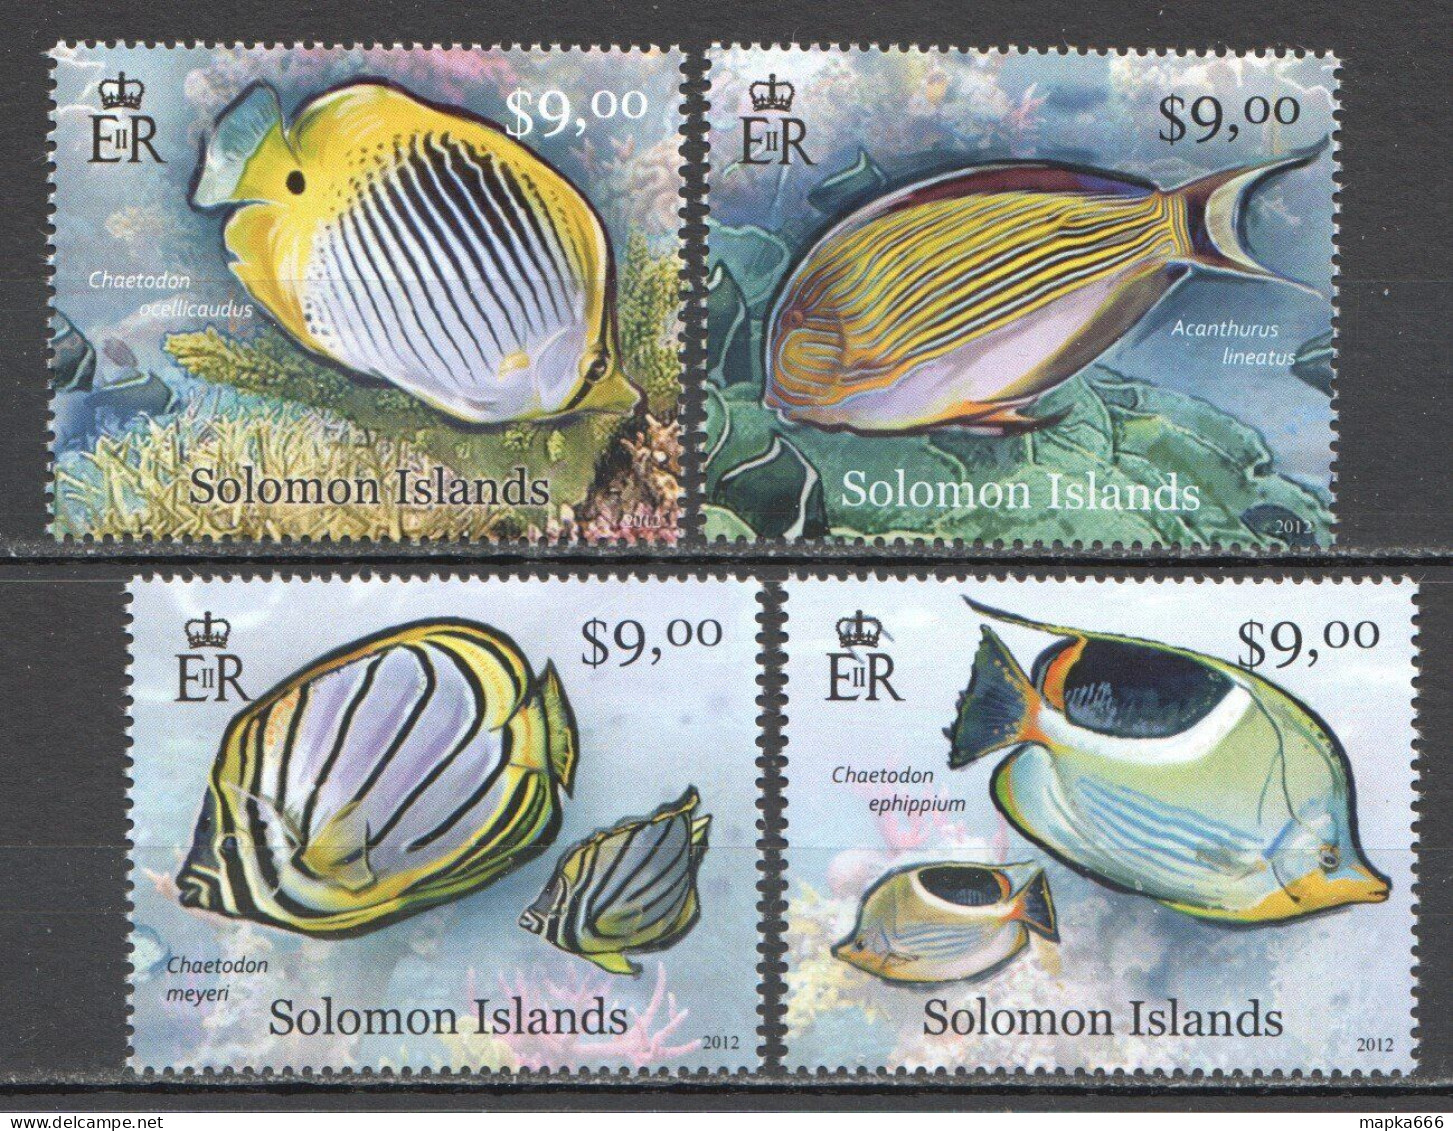 Wb361 2012 Solomon Islands Reef Fishes Marine Life #1461-64 Set Mnh - Vie Marine